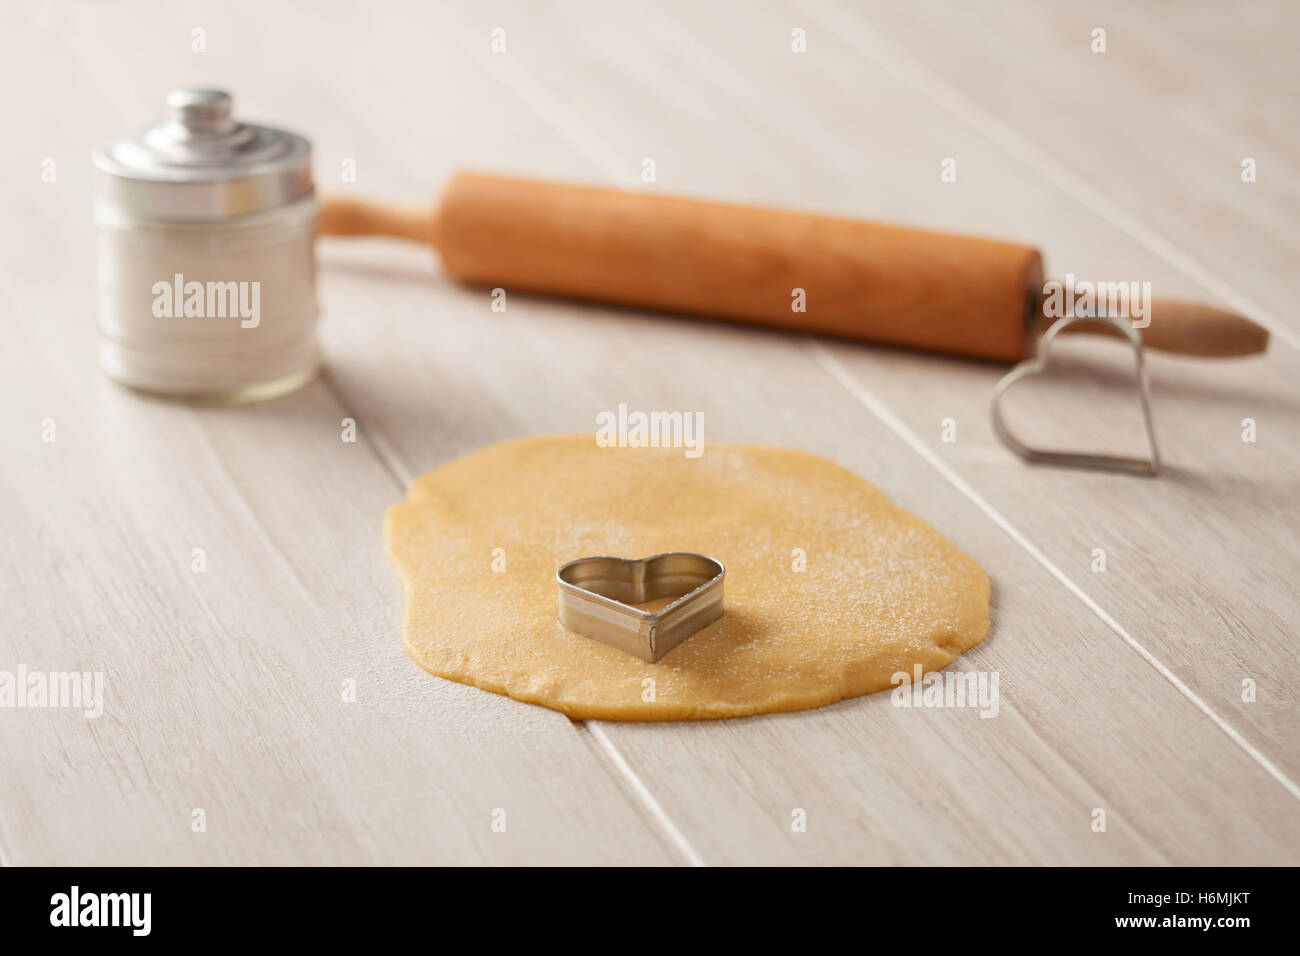 https://c8.alamy.com/compes/h6mjkt/ingredientes-y-utensilios-para-cocinar-cookies-en-tablero-de-madera-gris-h6mjkt.jpg